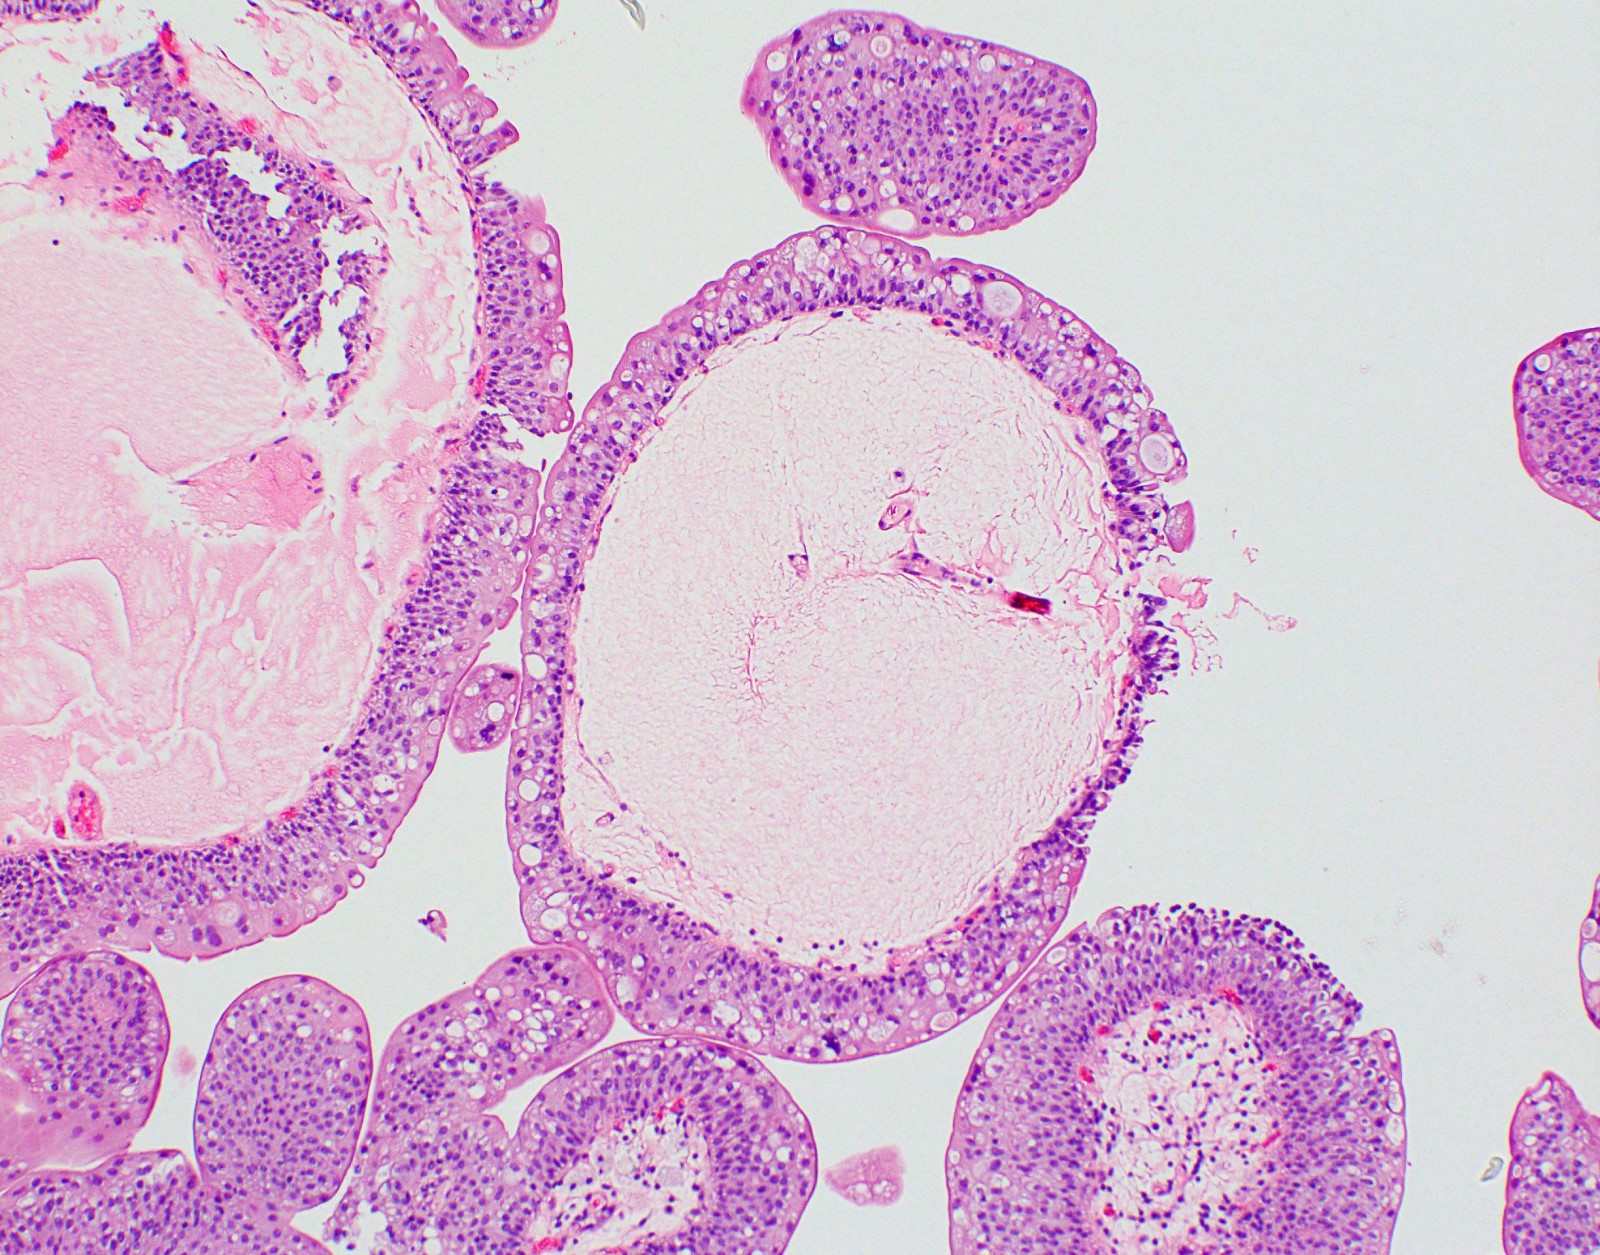 Papilloma bladder pathology outlines Urothelial papilloma pathology outlines